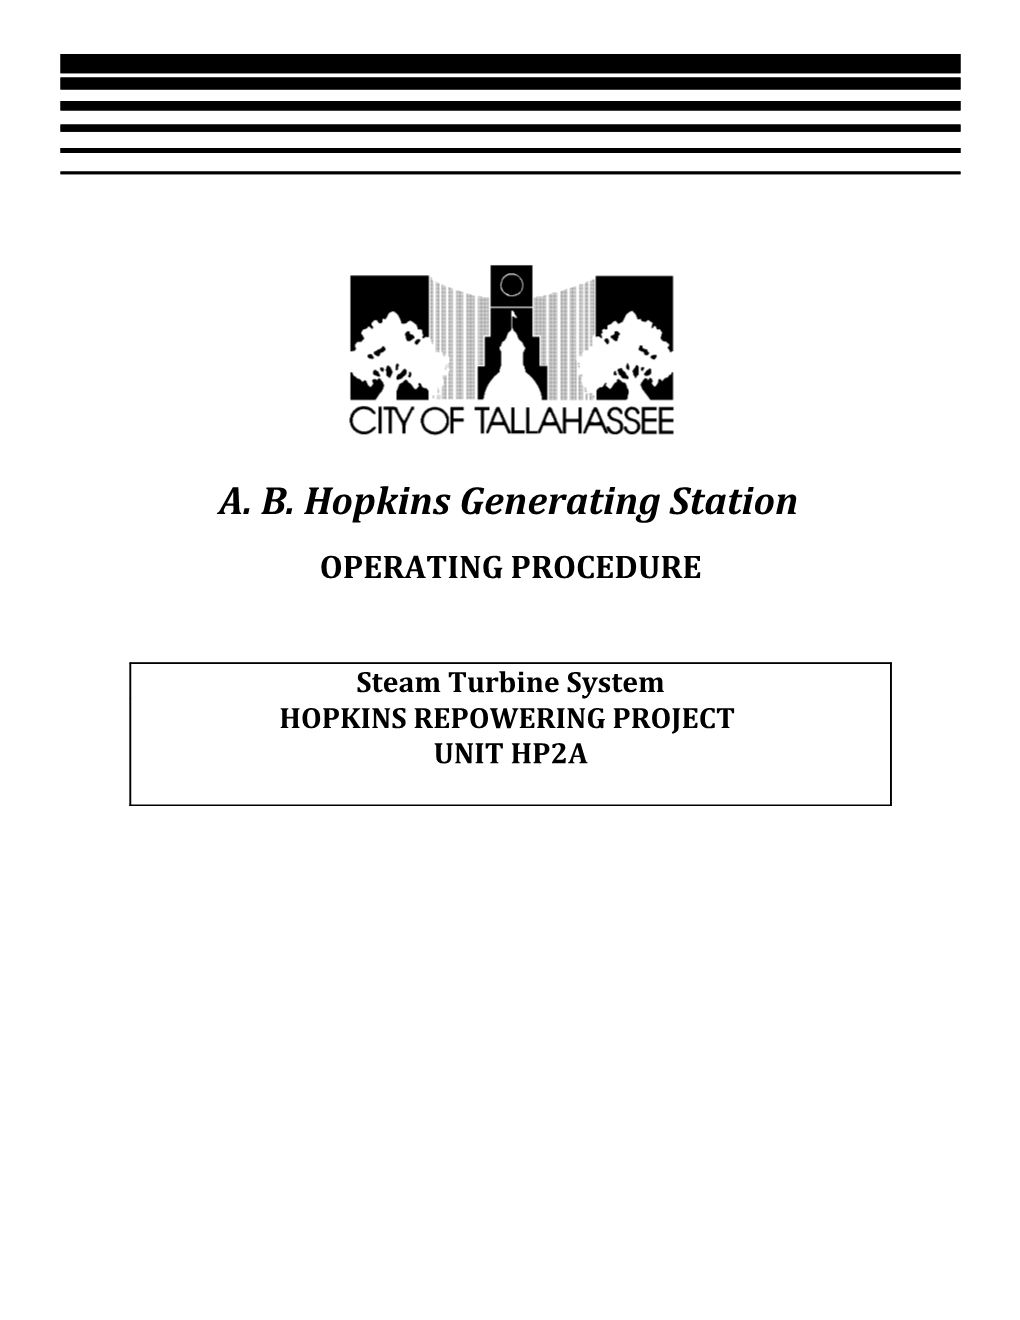 A.B. Hopkins Generating Station Circulating Water System